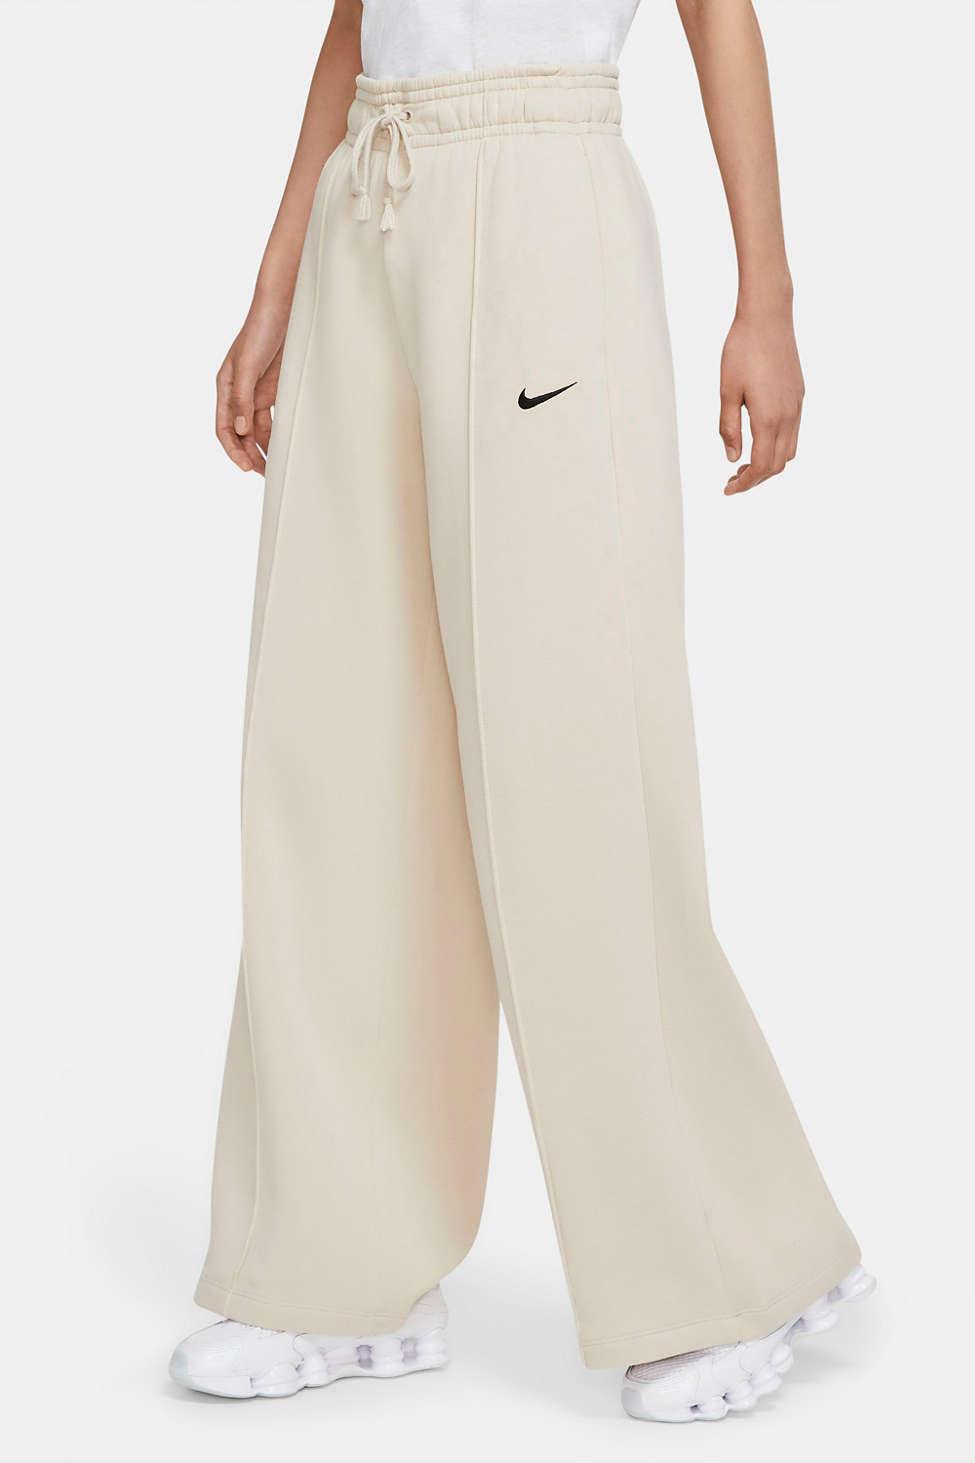 Nike Sportswear Trend Essential Fleece Pant in Beige (Natural) - Lyst